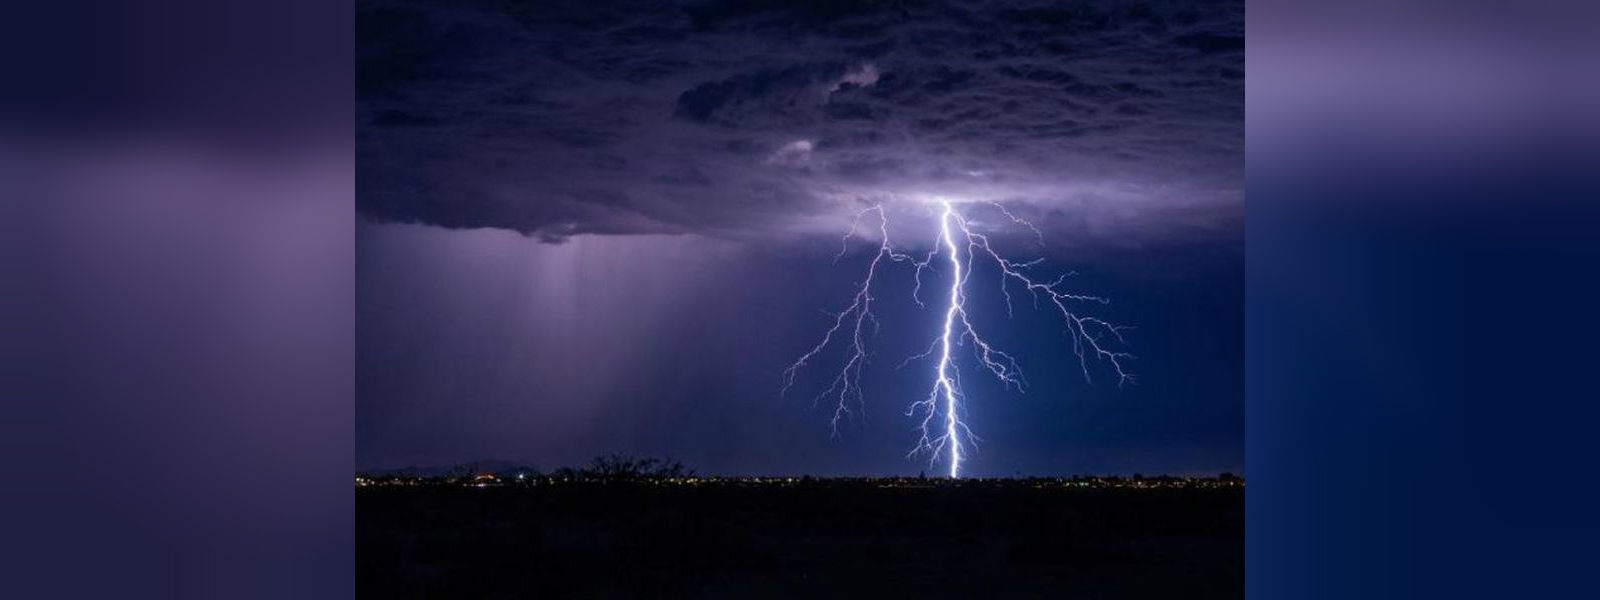 Severe lightning warning for several areas